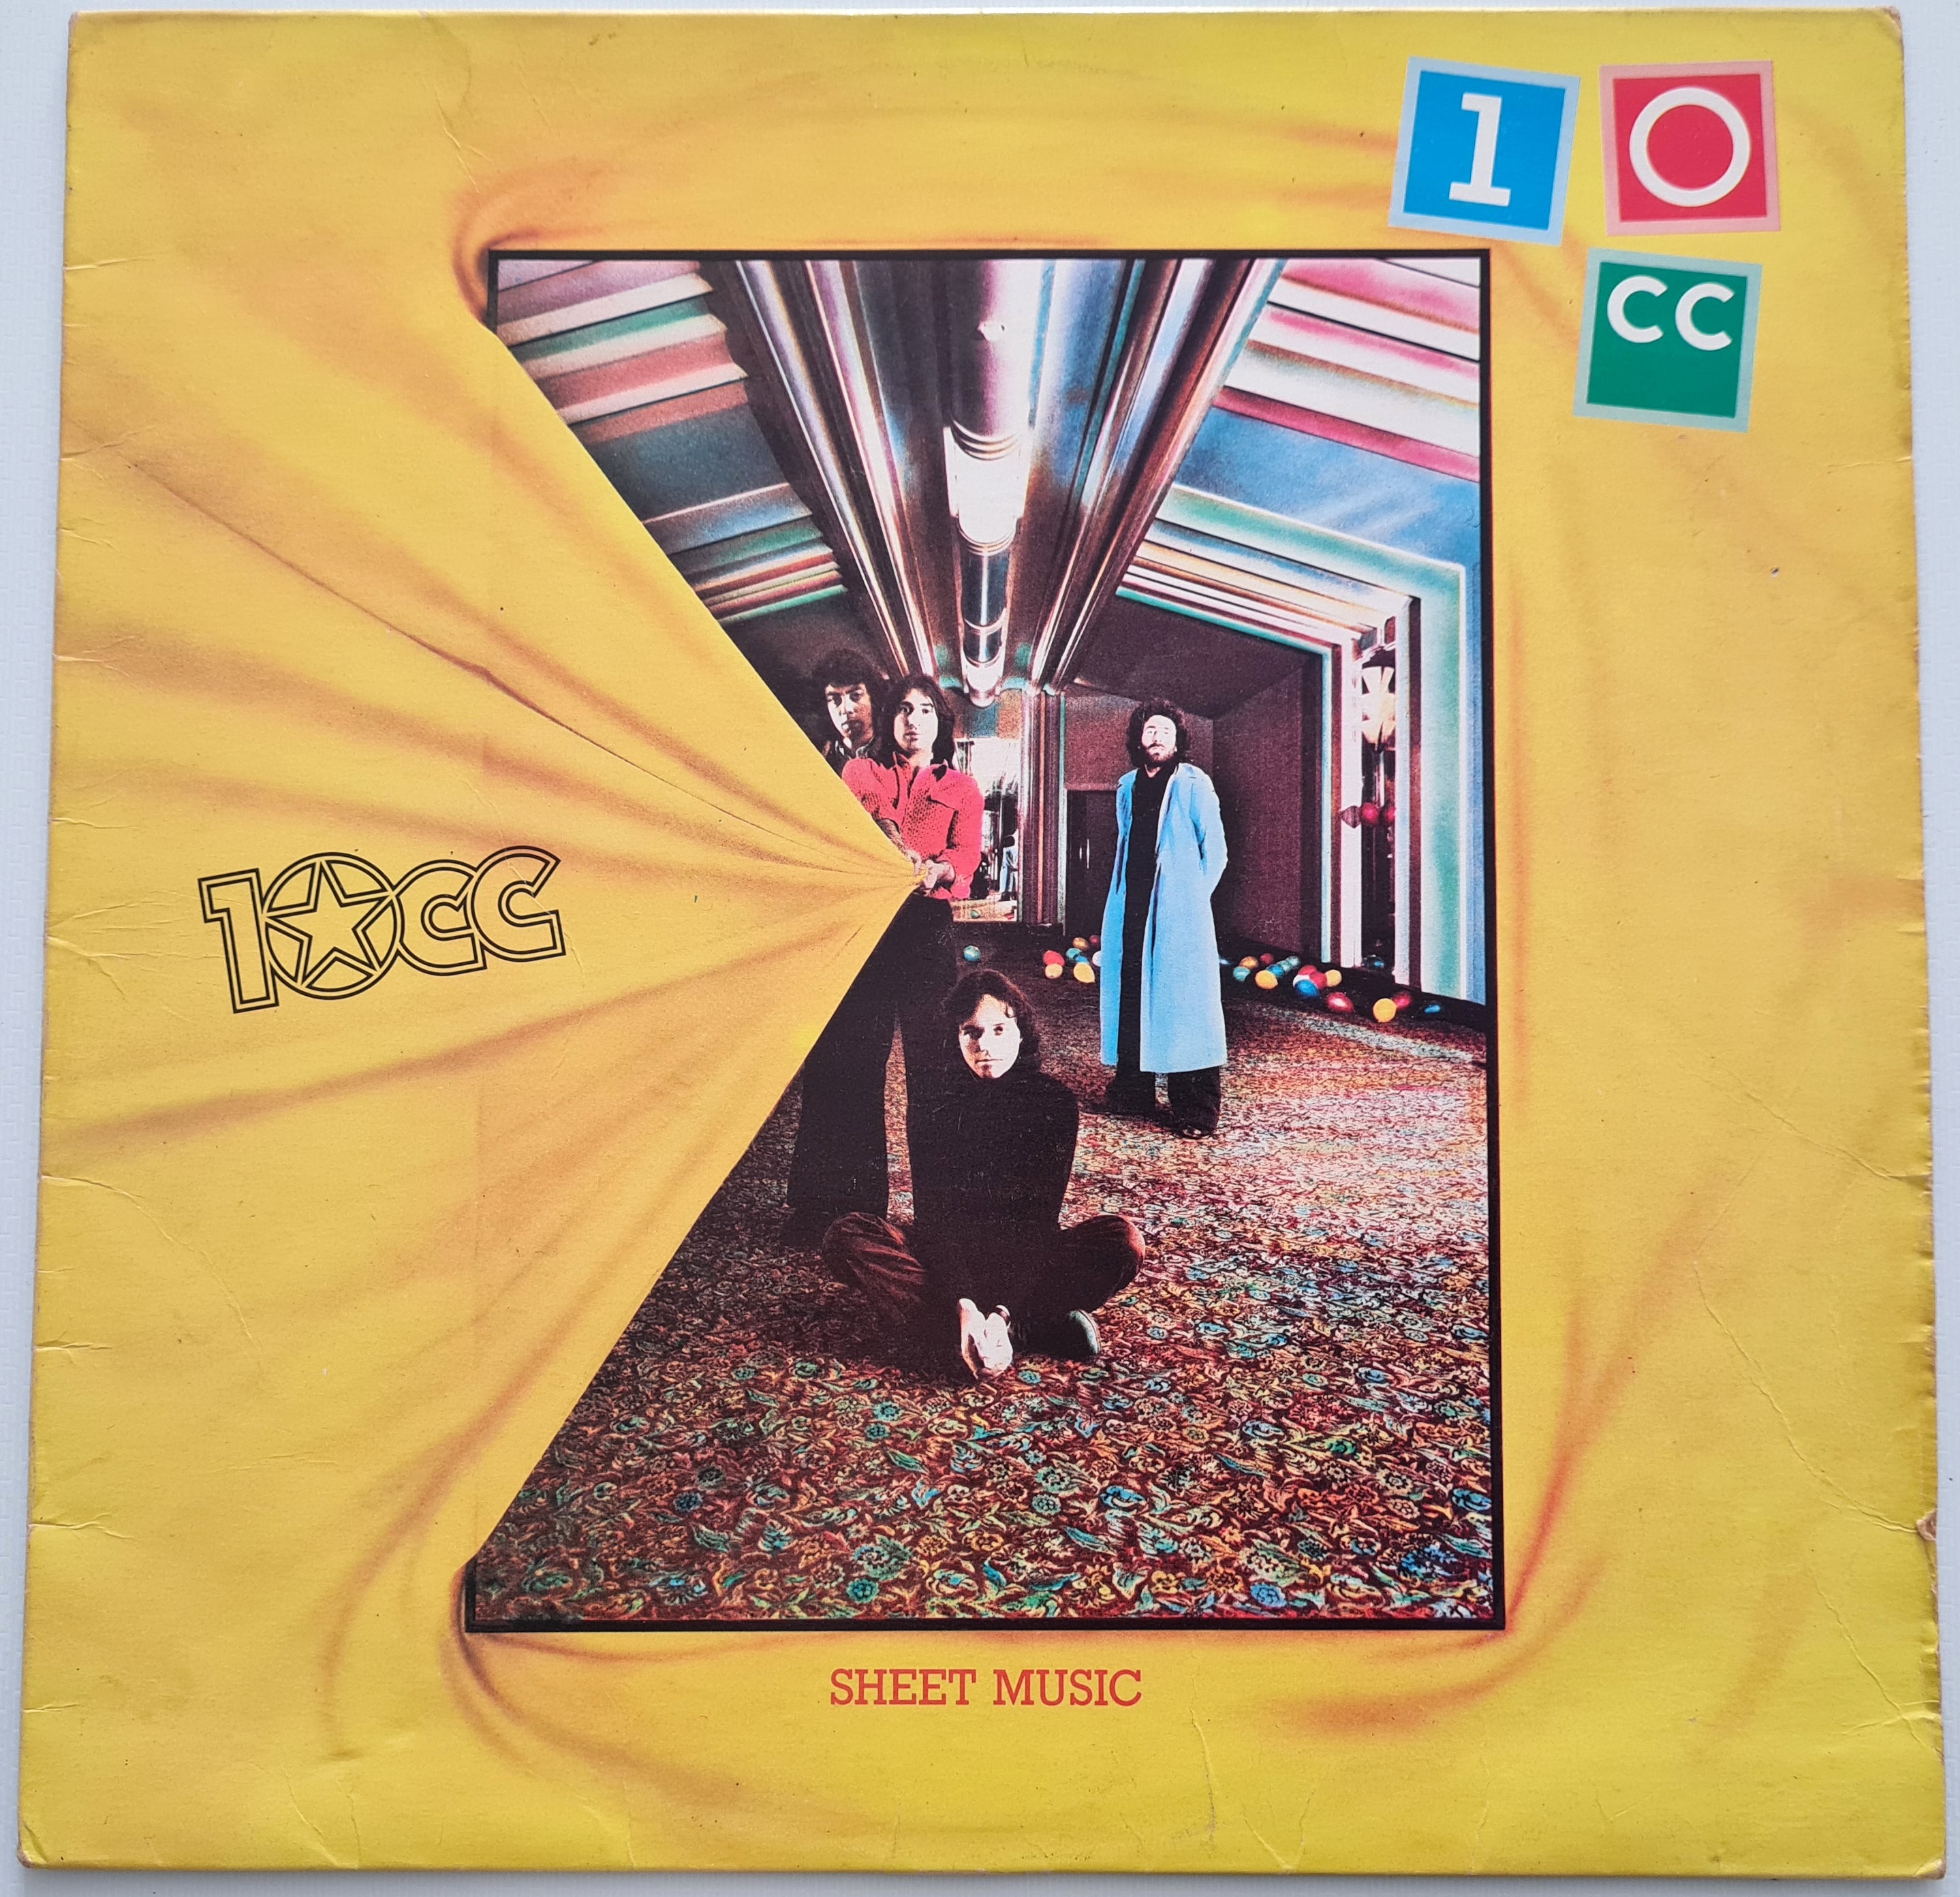 10cc - Sheet Music (LP)